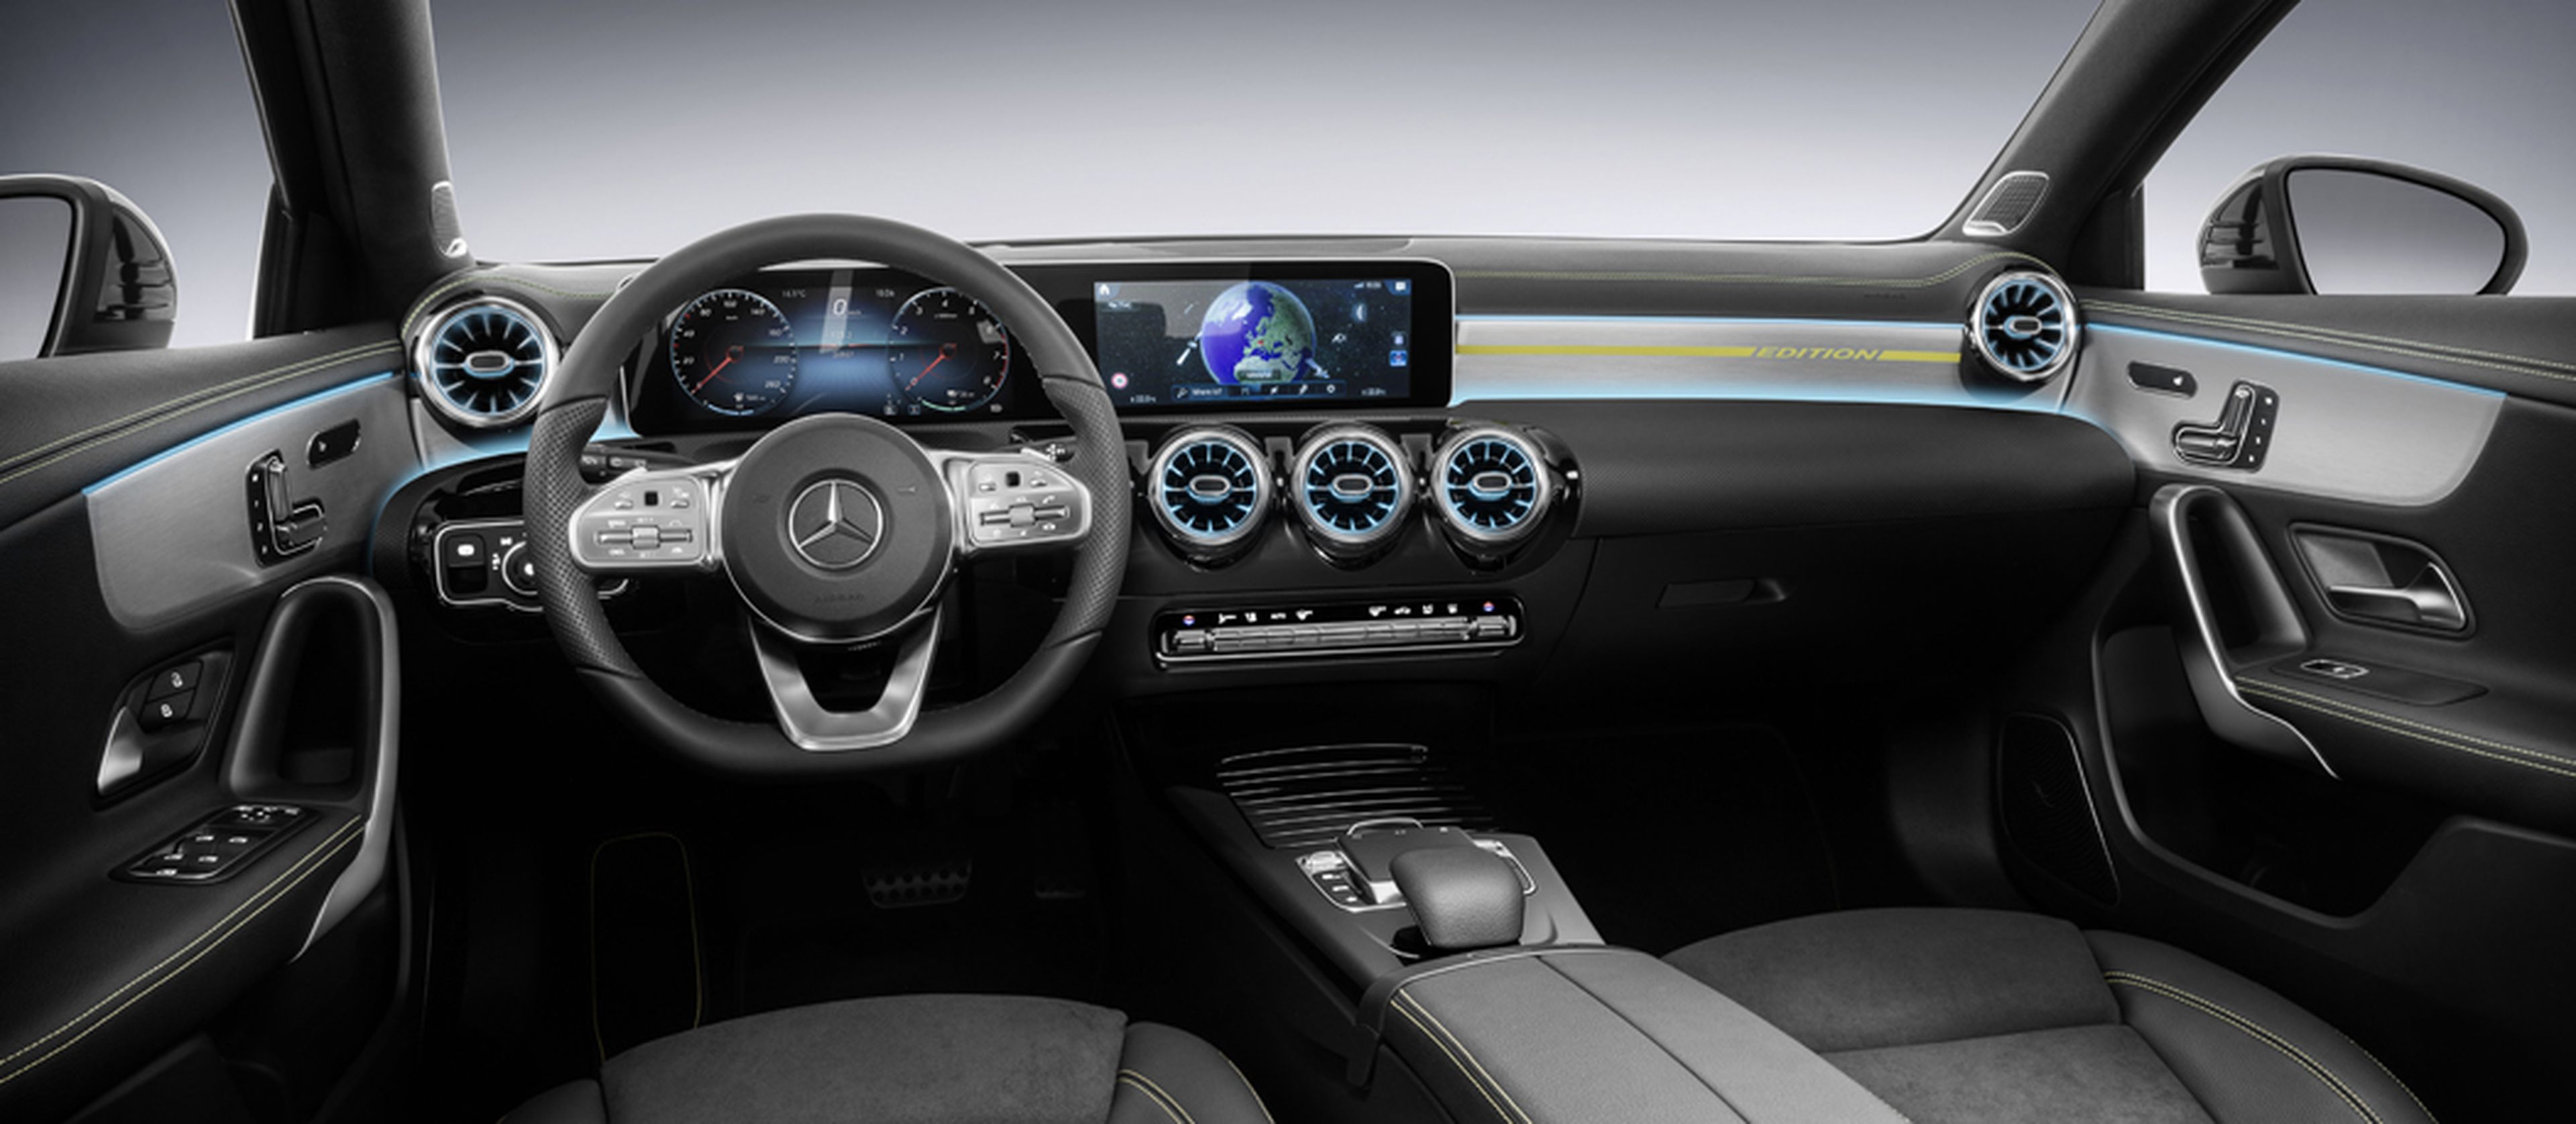 Así es el interior del Mercedes Clase A (2018)